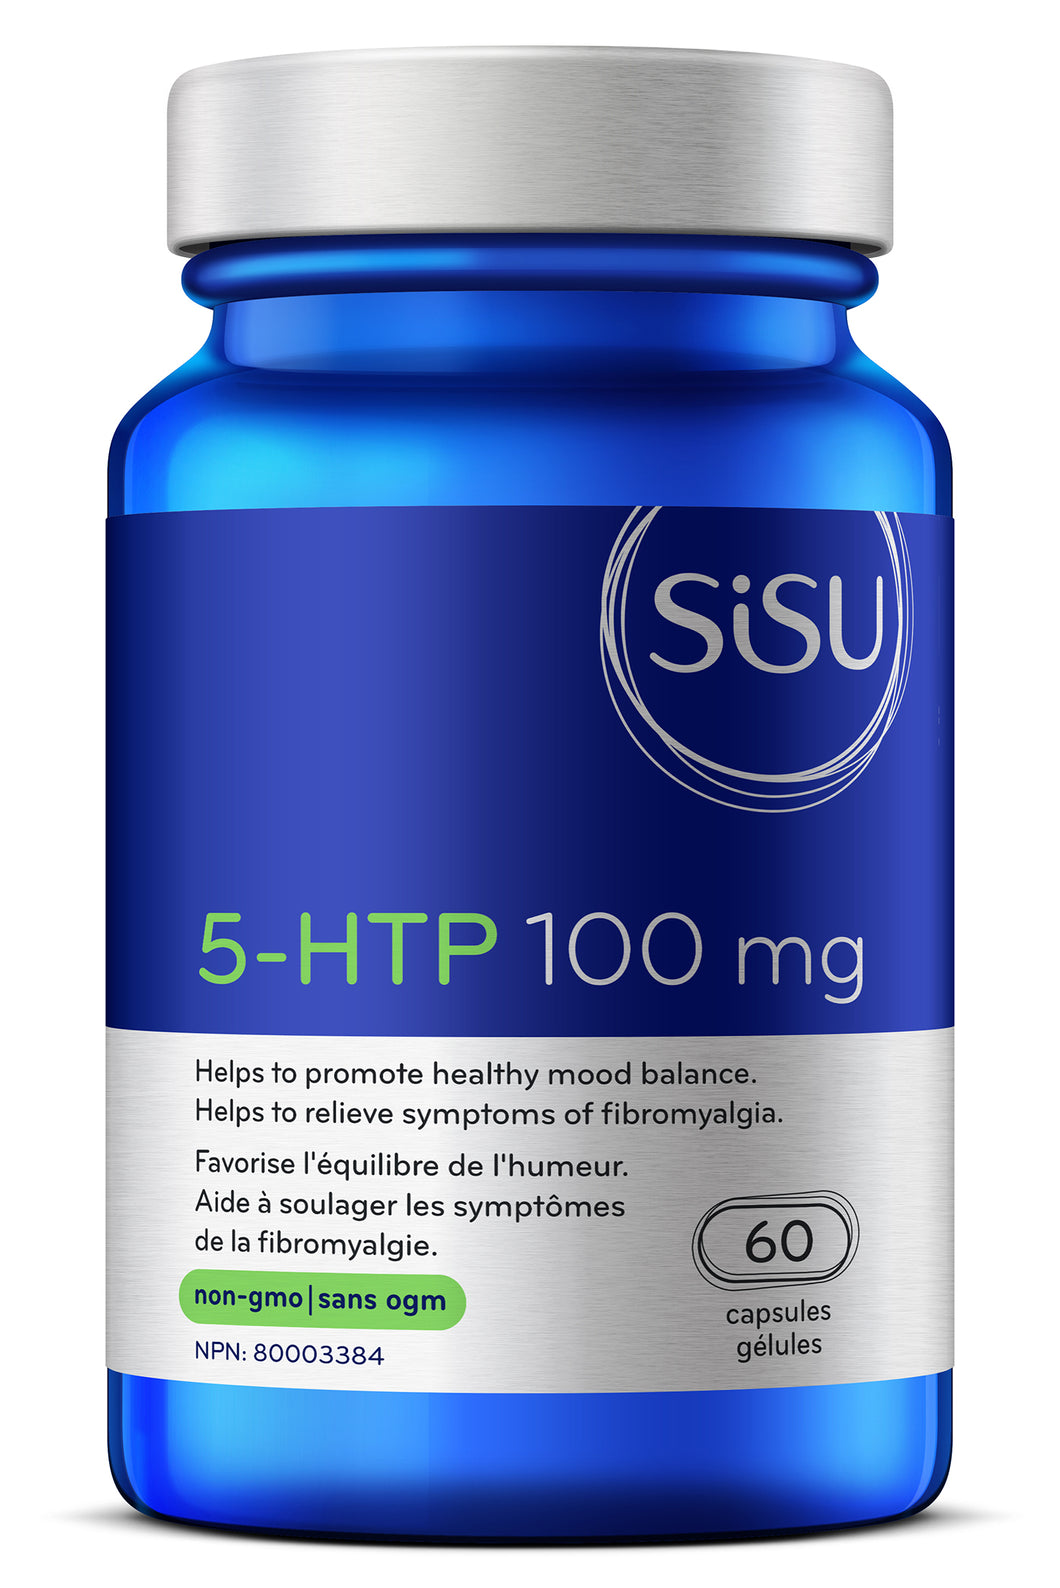 Sisu 5-HTP 100 mg